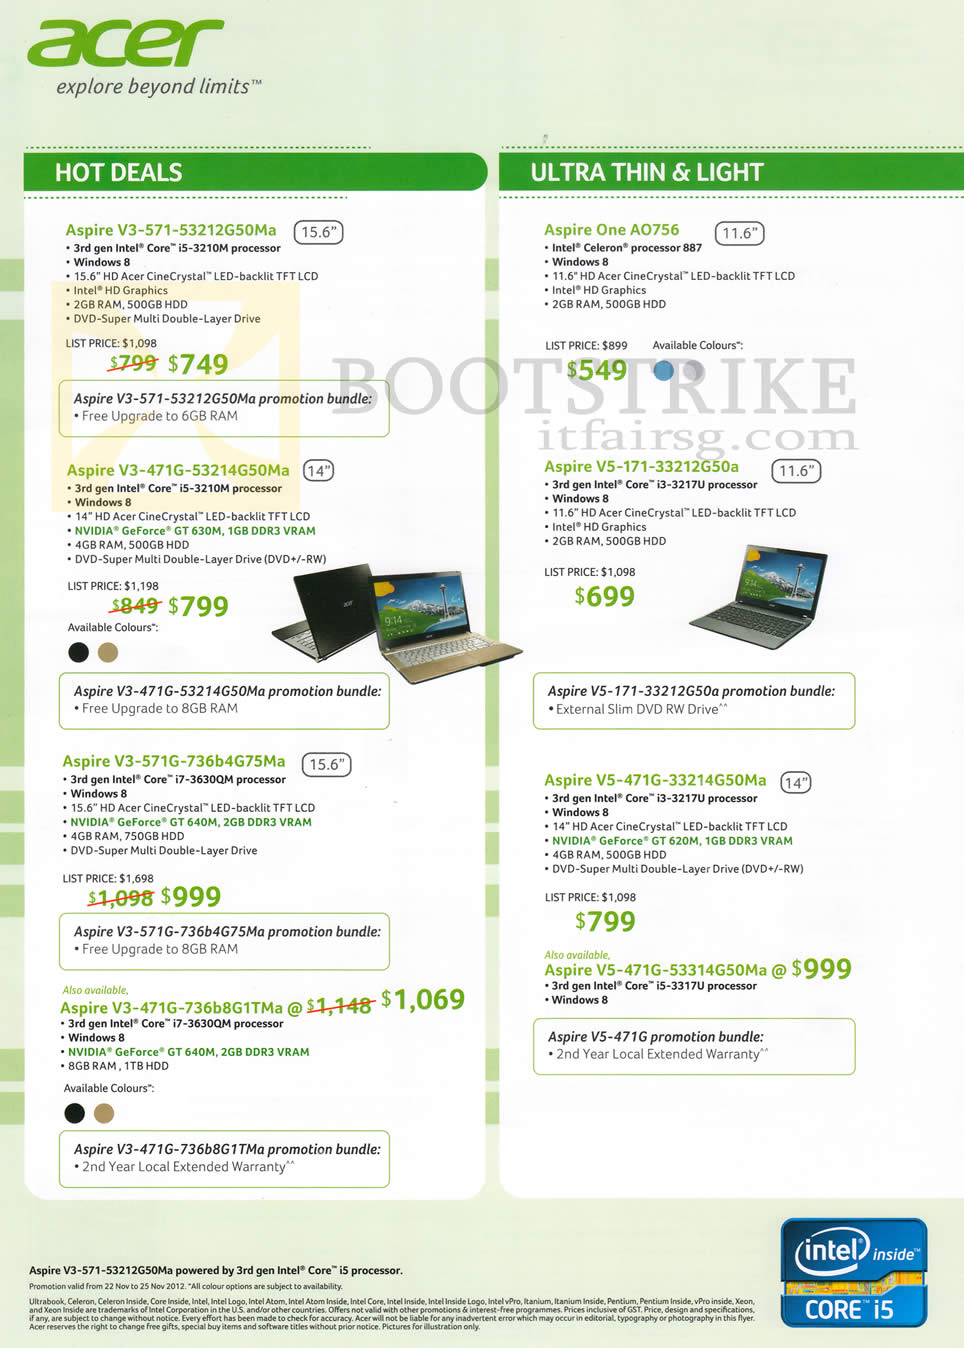 SITEX 2012 price list image brochure of Acer Notebooks Aspire V3-571-53212G50Ma, V3-471G-53214G50Ma, One AO756, V5-171-33212G50A, V5-471G-53314G50Ma, V3-571G-736b4G75Ma, V5-471G-53314G50Ma